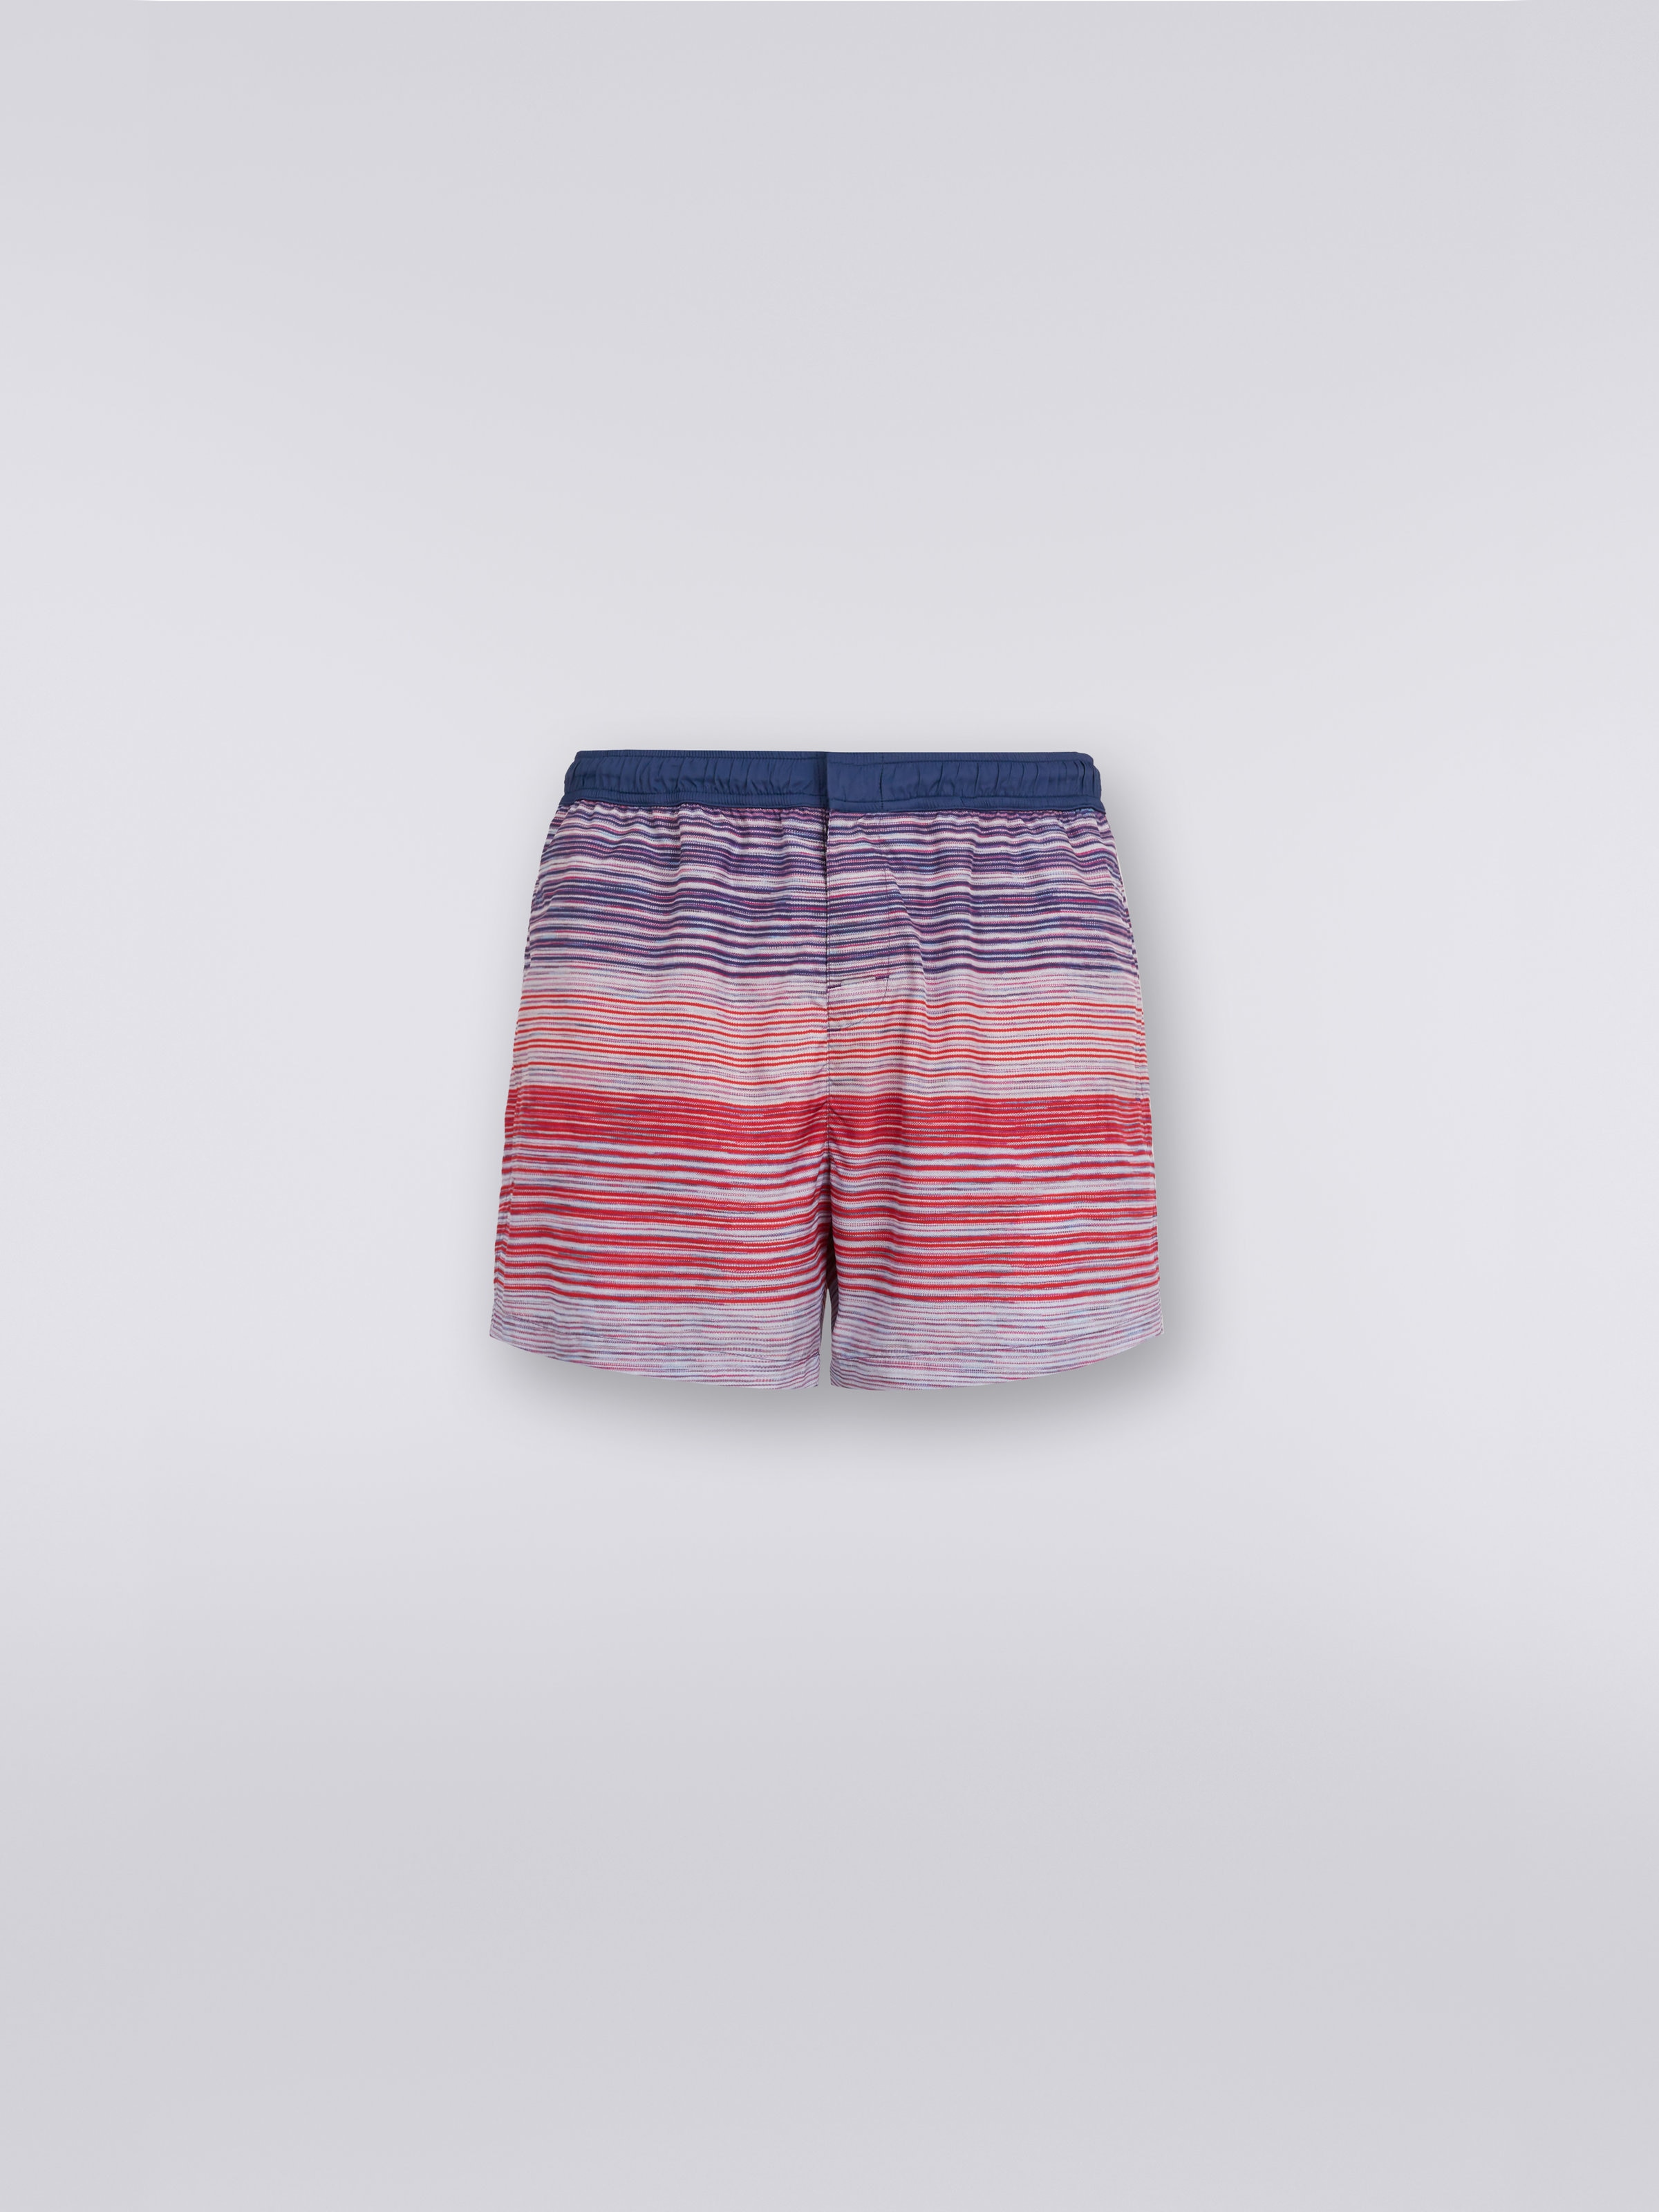 Nylon-blend swimming trunks in slub print, Red, Purple & Light Blue - 0